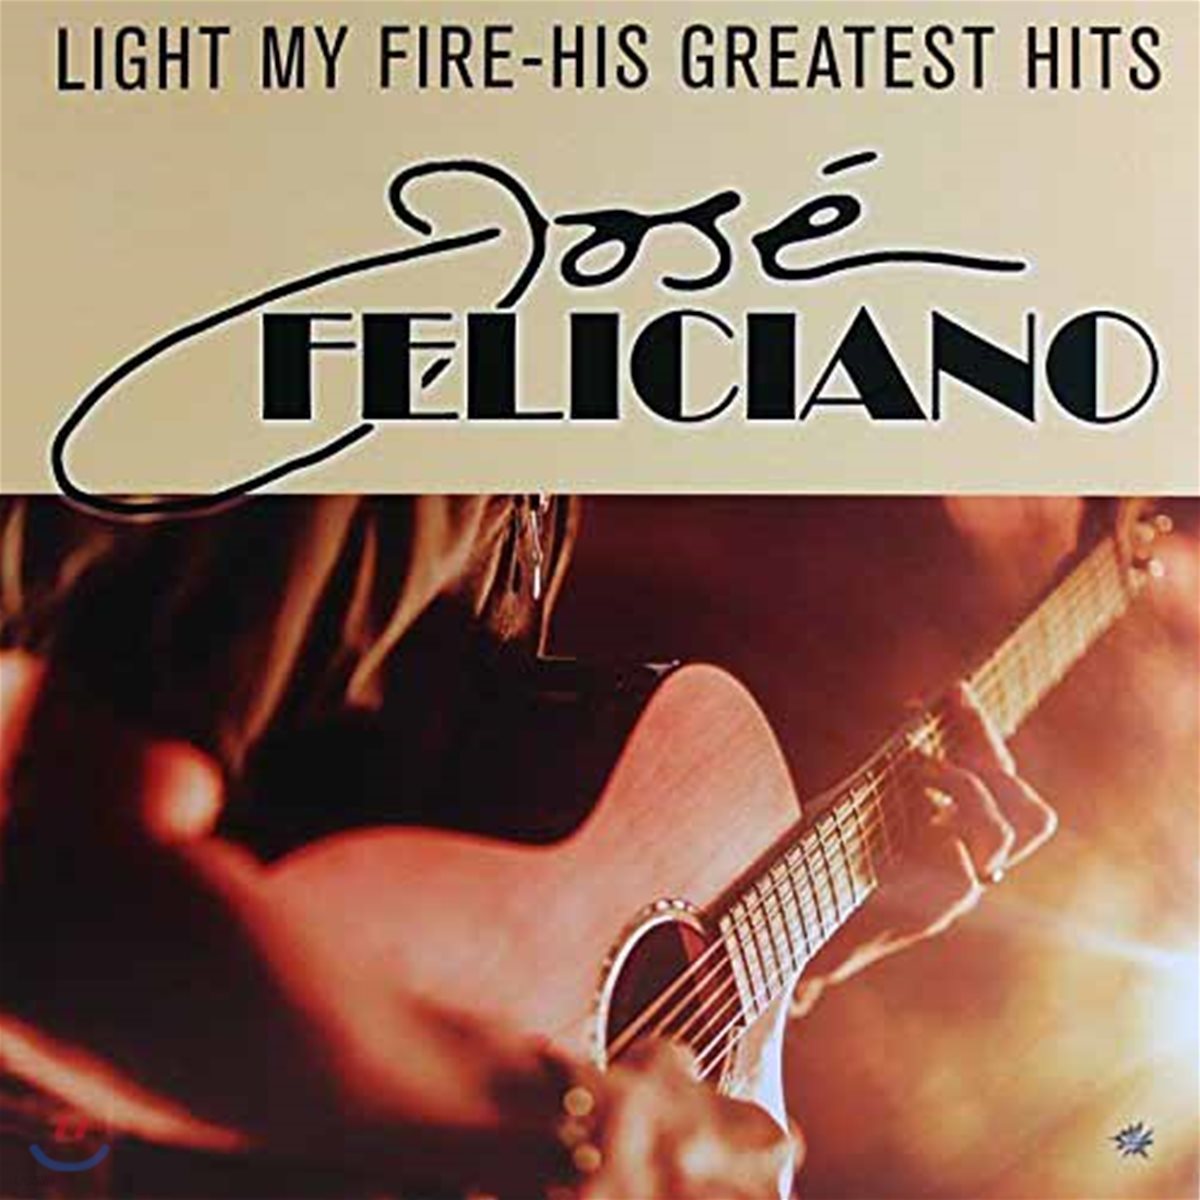 Jose Feliciano (호세 펠리치아노) - Light My Fire: His Greatest Hit [LP]